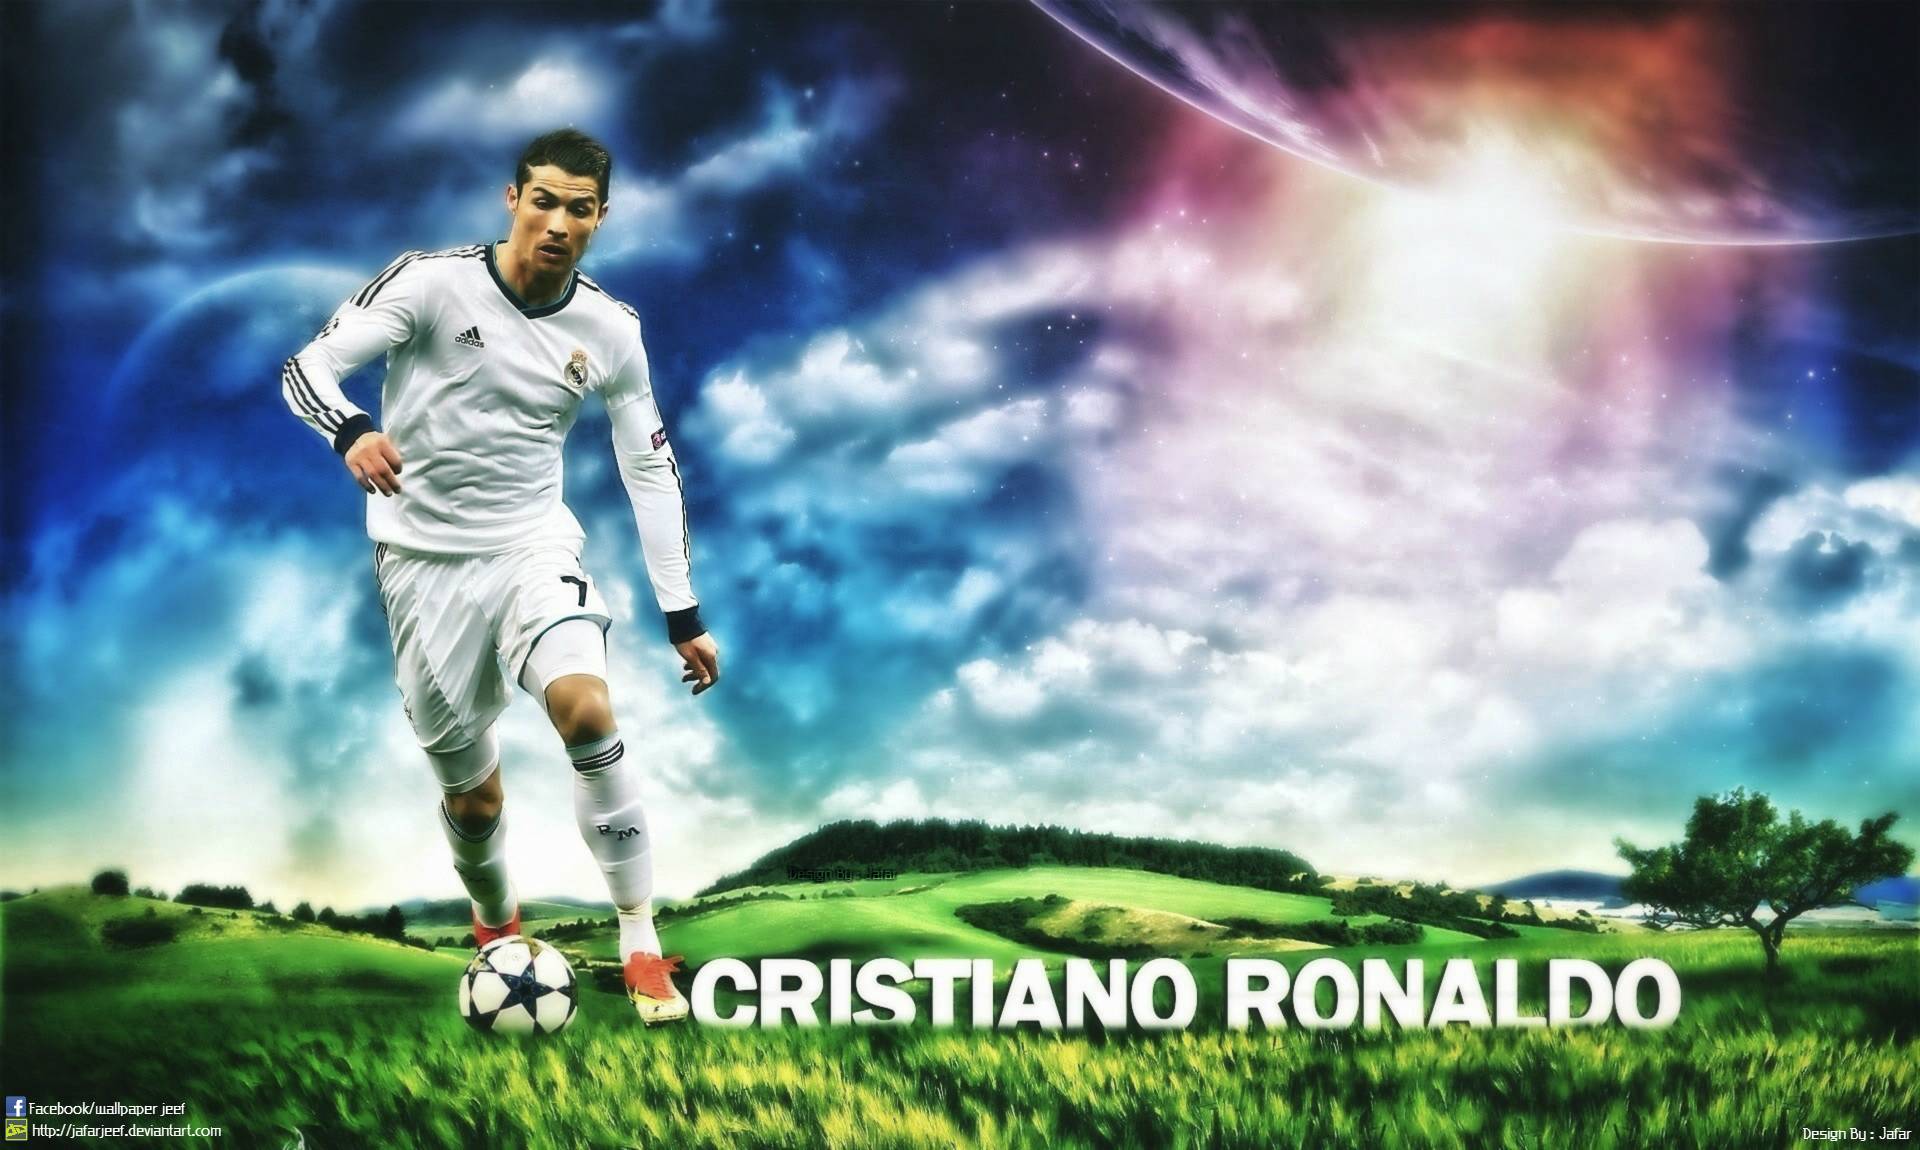 Cristiano Ronaldo Goals